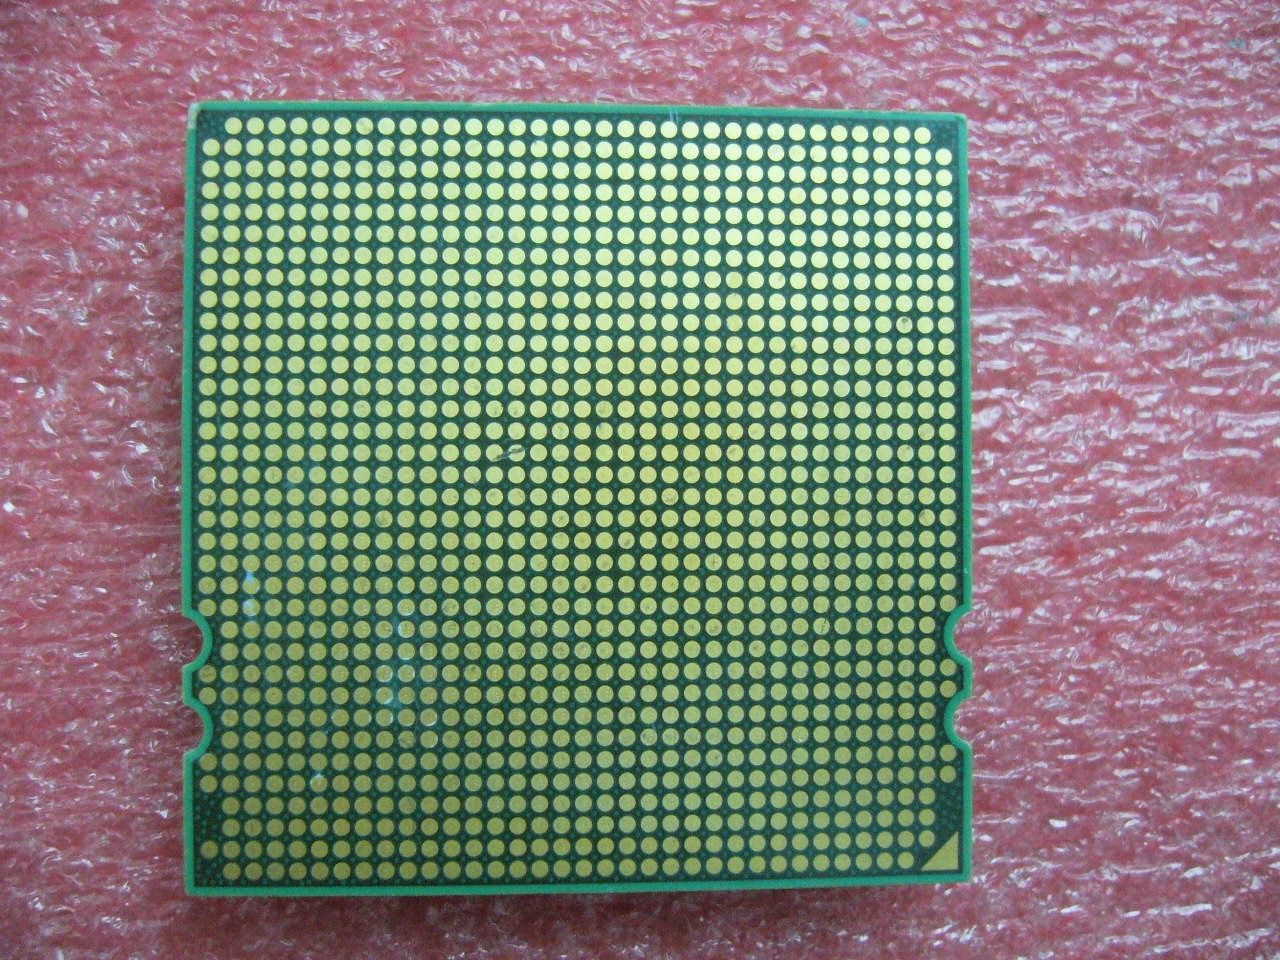 QTY 1x AMD Opteron 2376 HE 2.3 GHz Quad-Core (OS2376PAL4DGI) Socket F 1207 - Click Image to Close